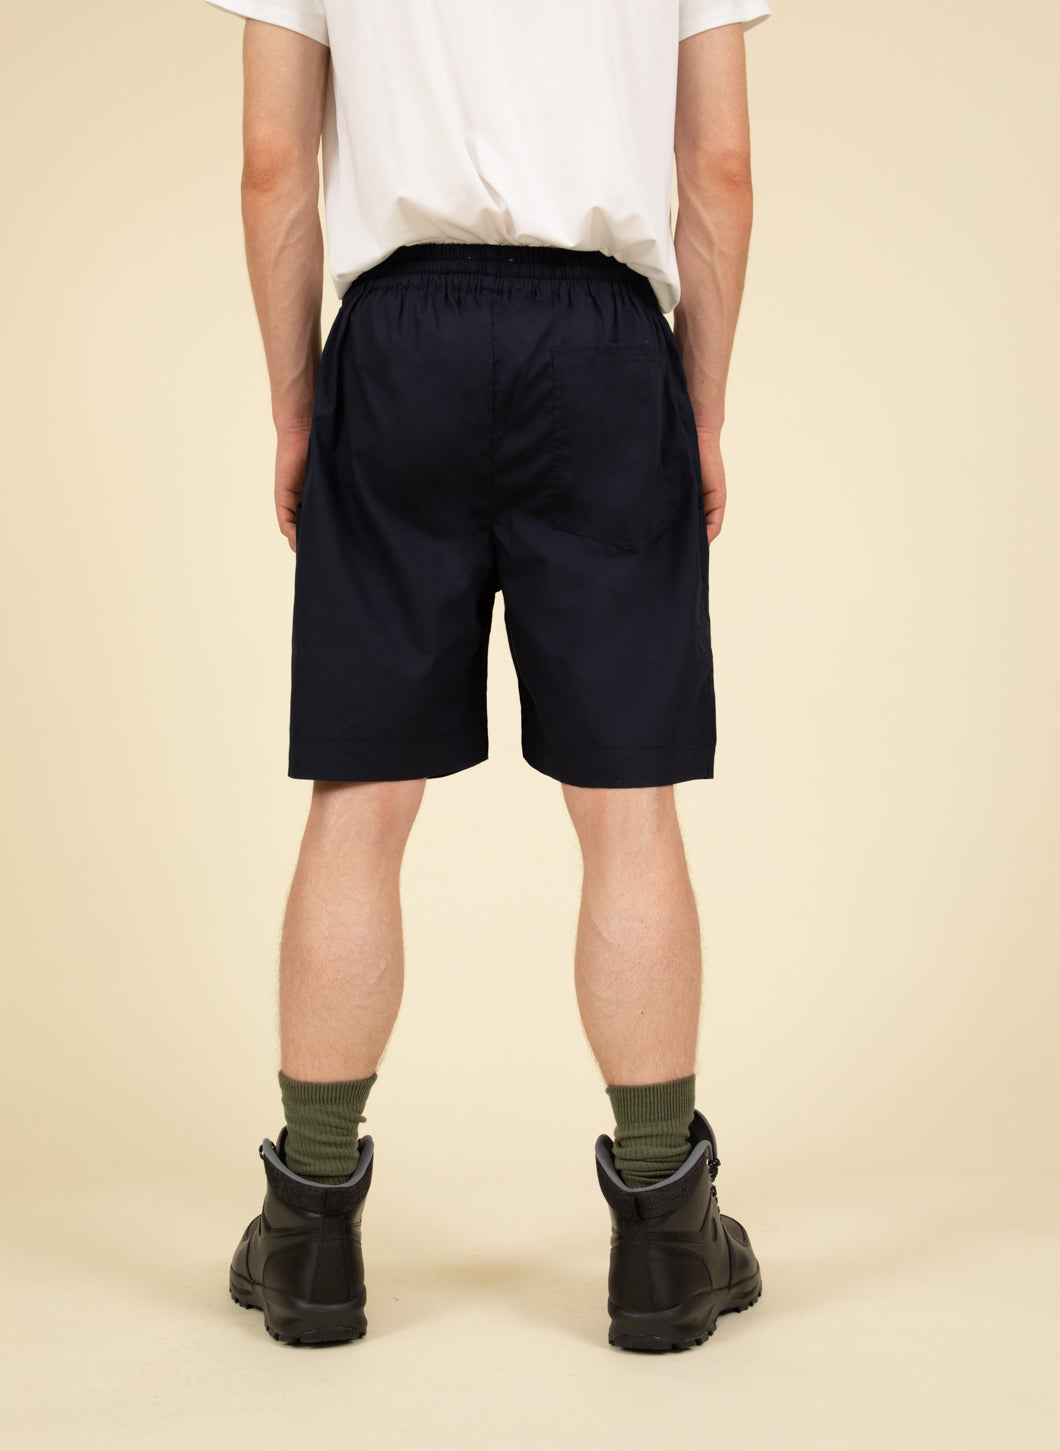 Bermuda Shorts with Stitched Waist in Navy Blue Poplin